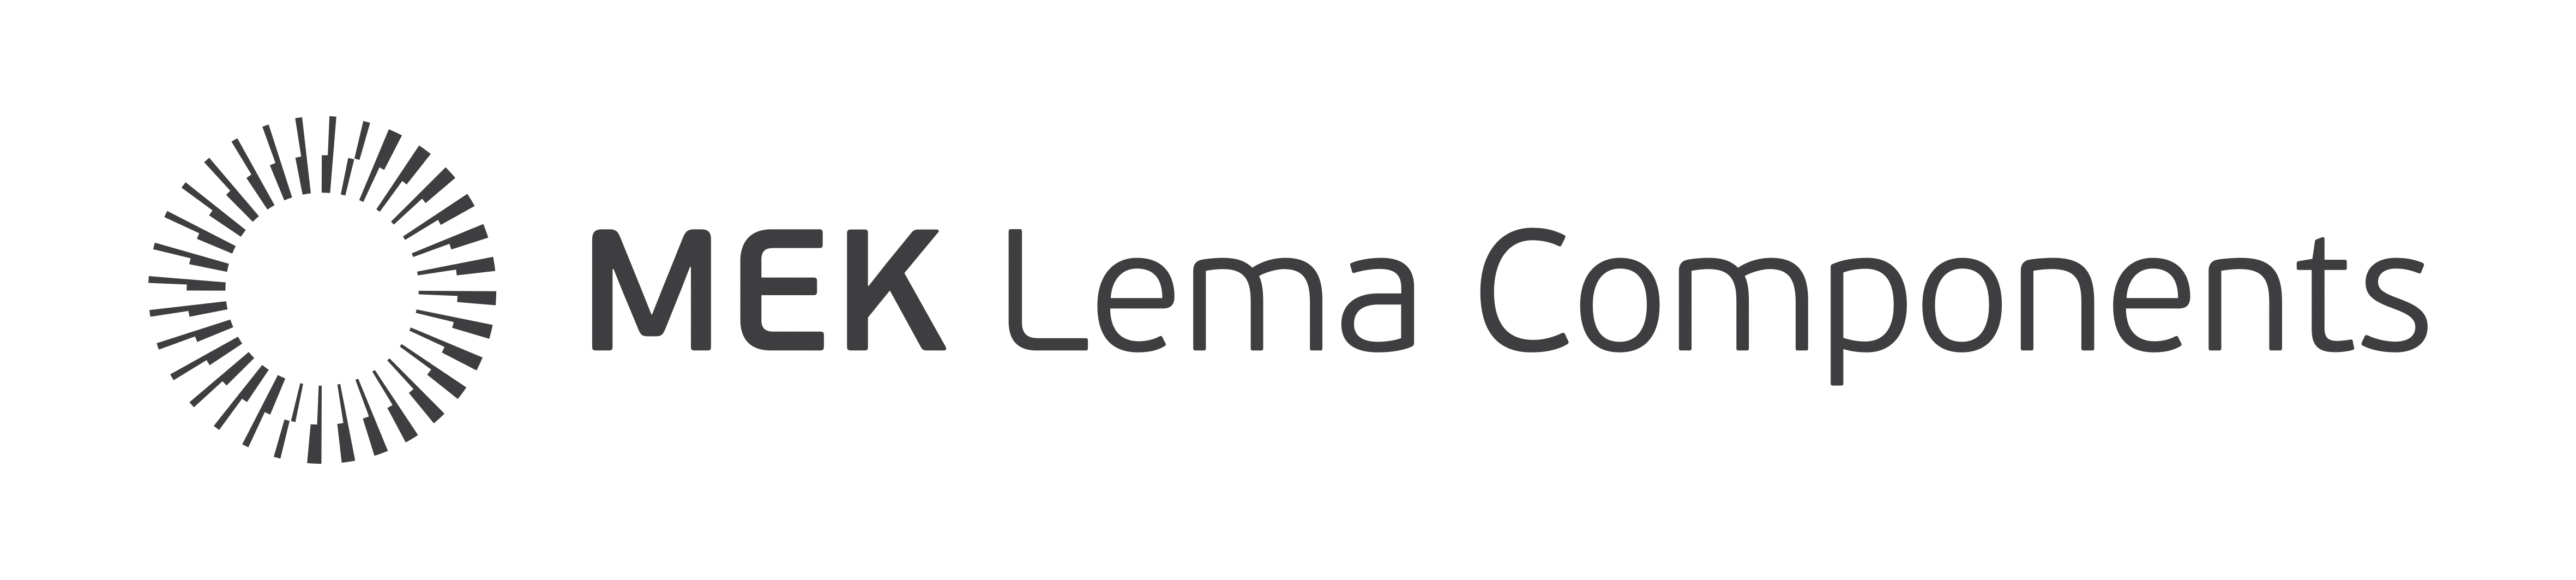 MEK Lema Components